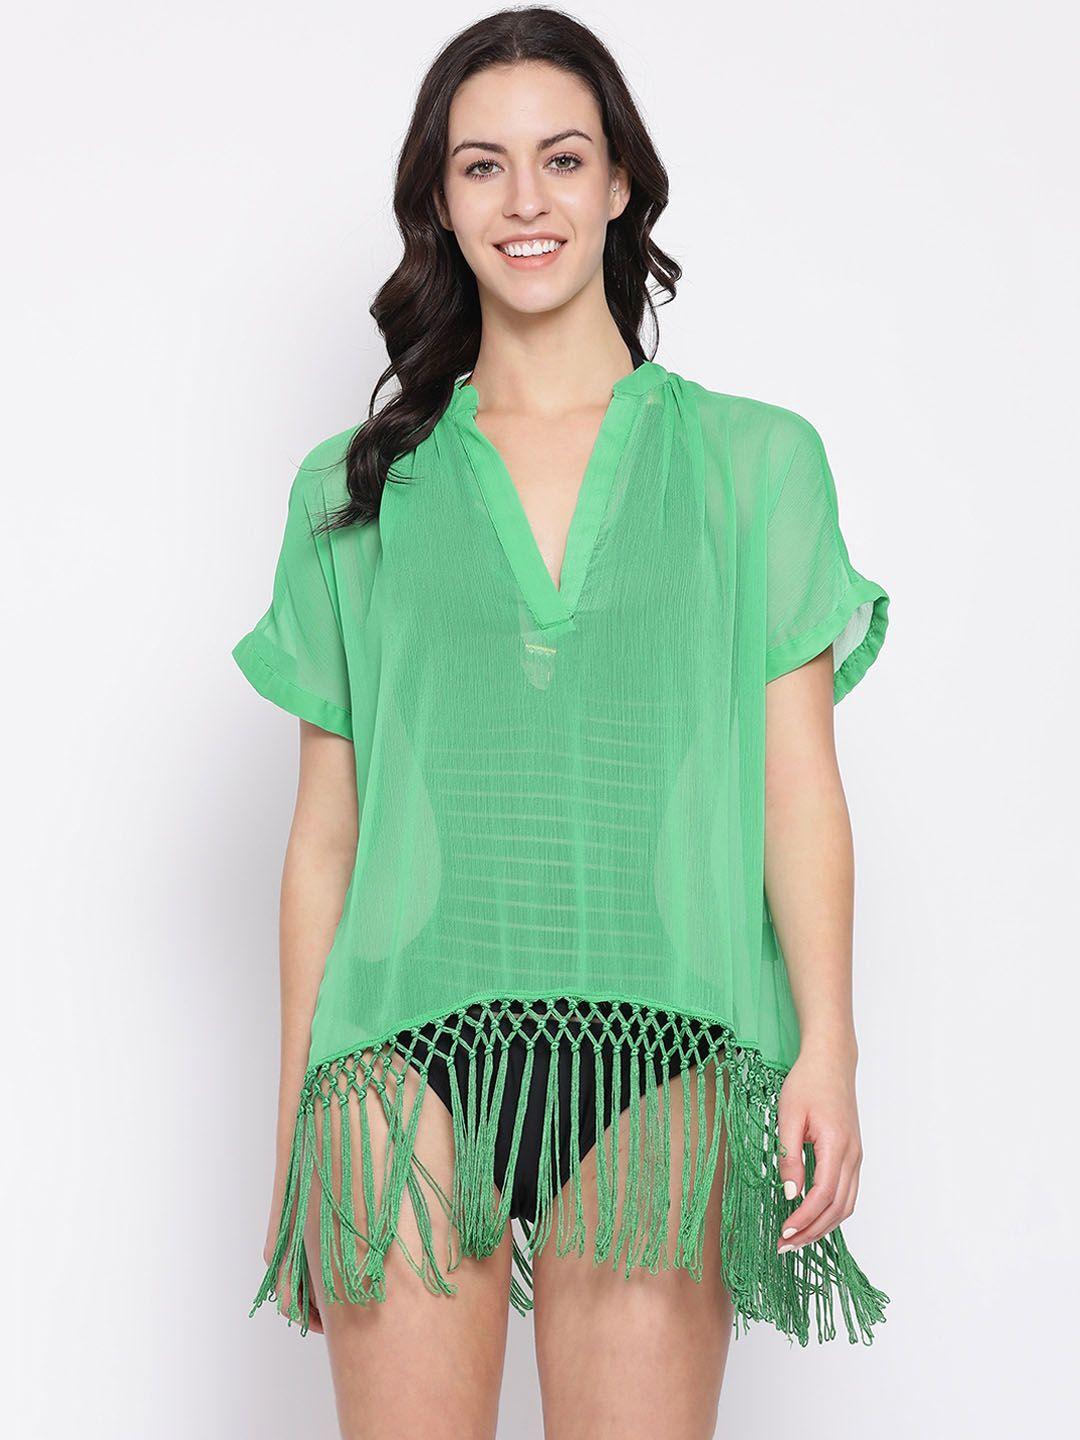 oxolloxo women beachwear green solid cover-up dress